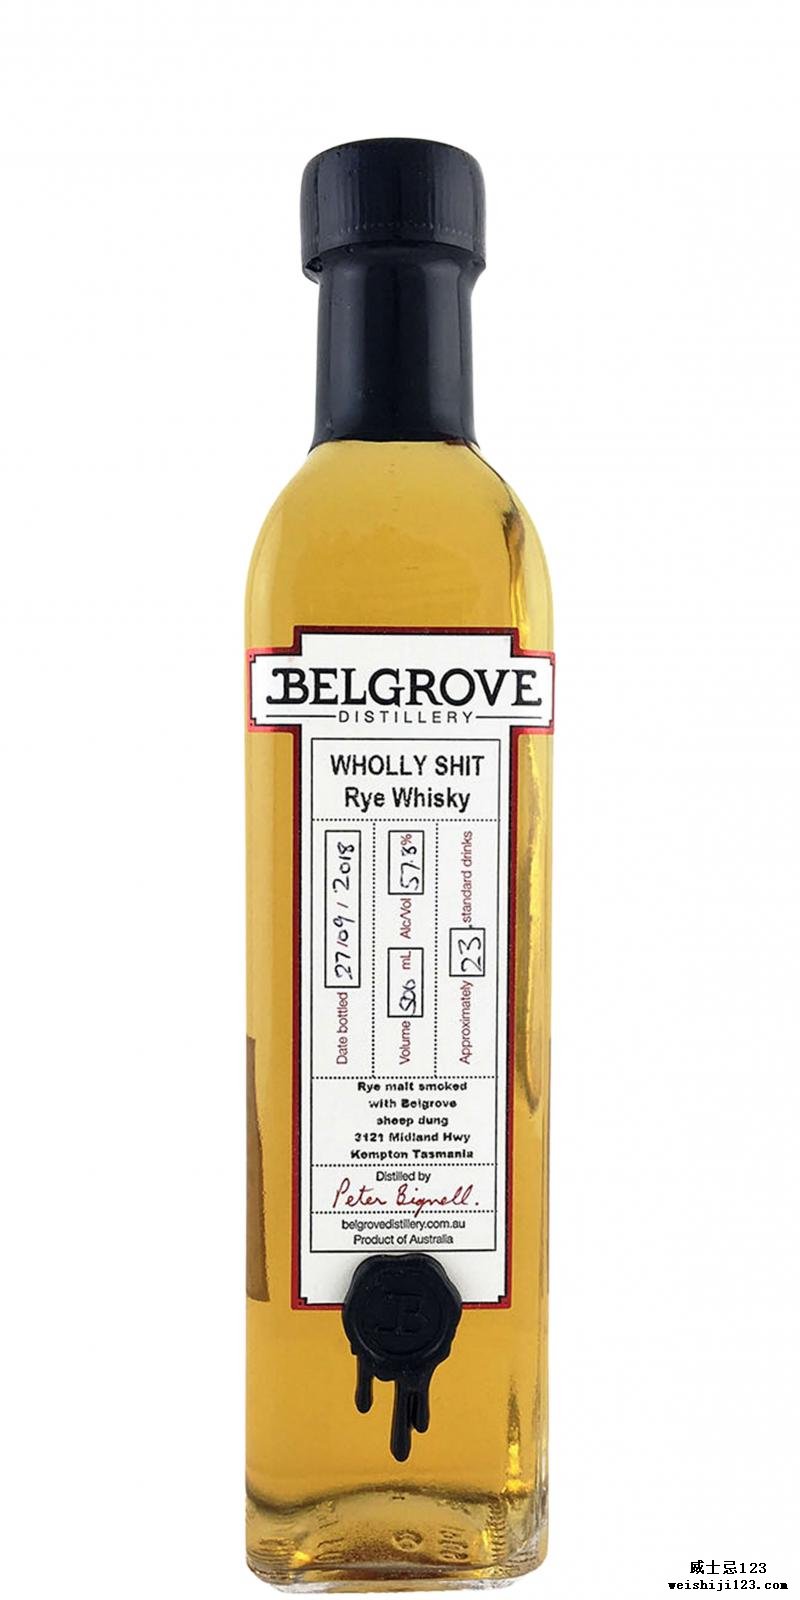 Belgrove Wholly Shit Rye Whisky